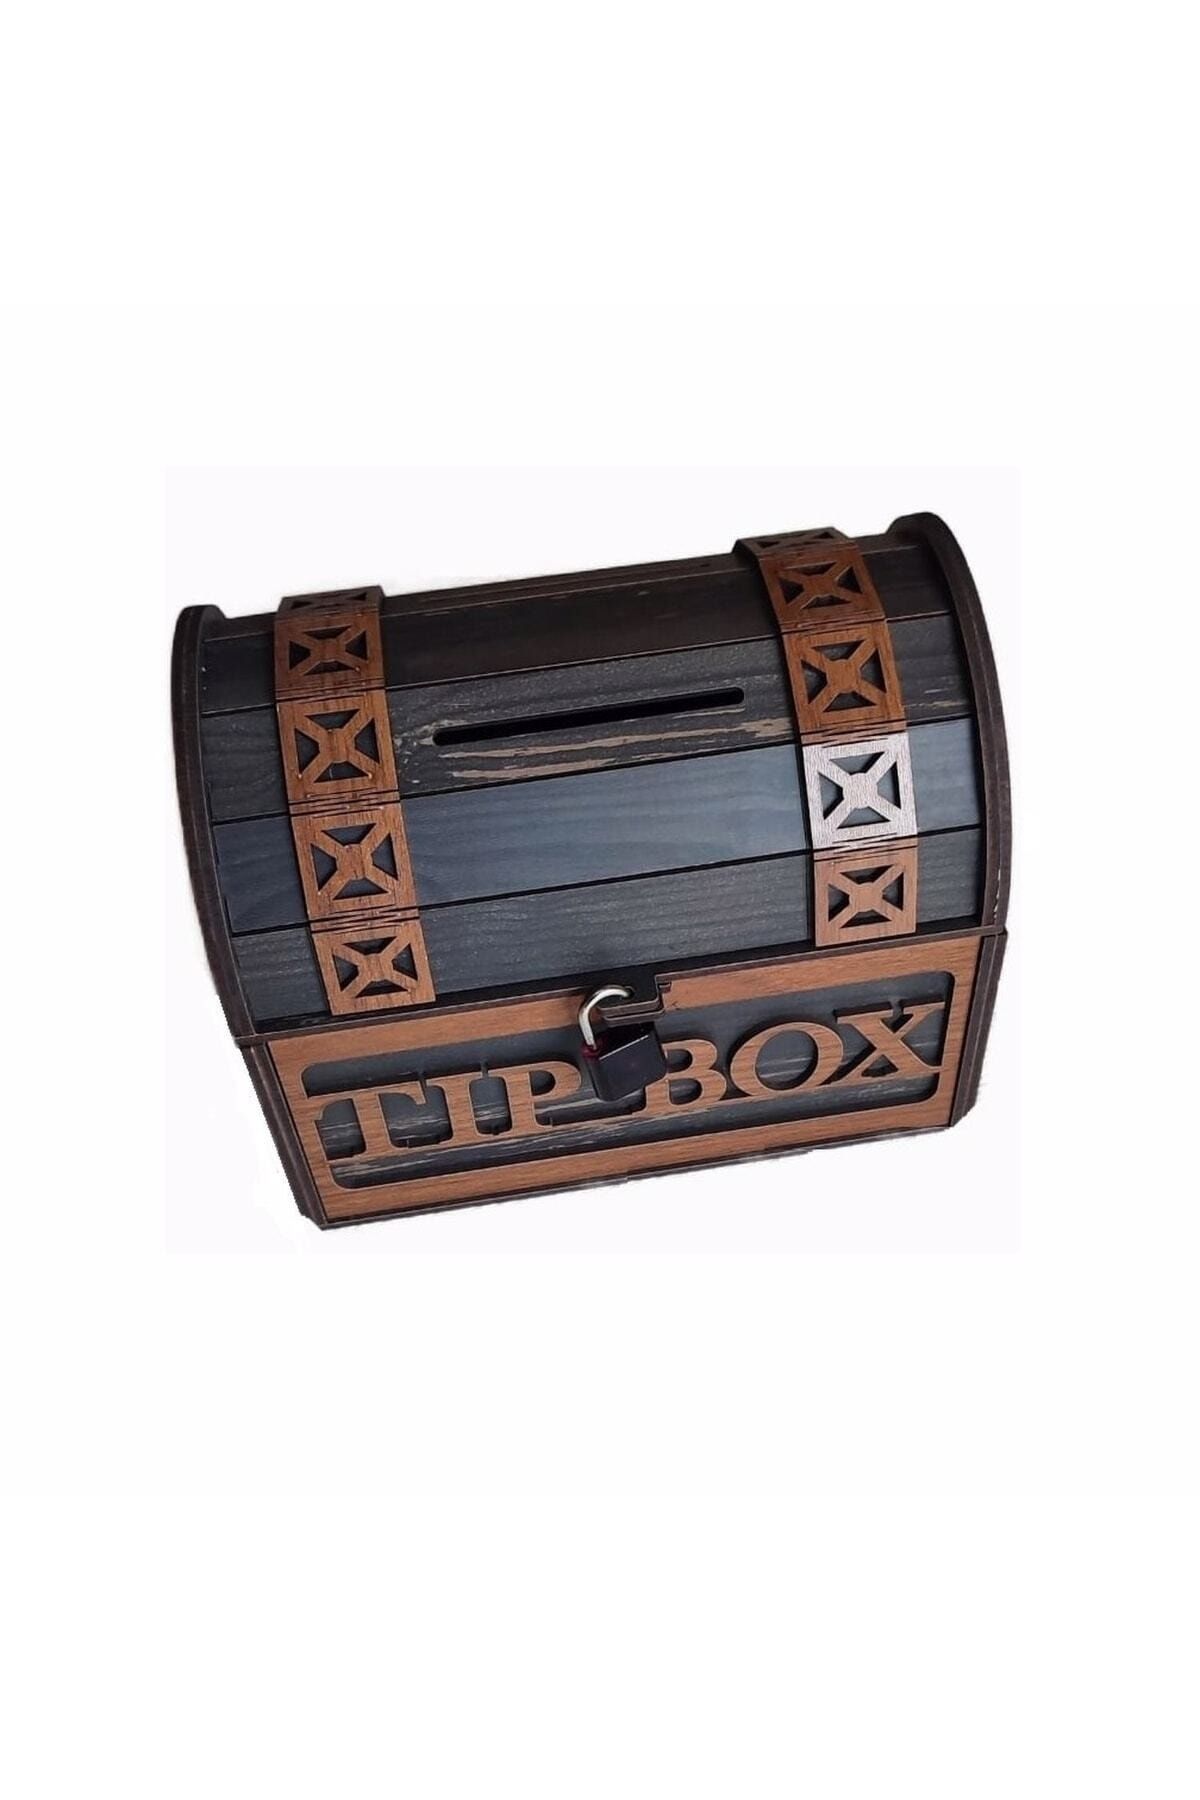 Genel Markalar Tip Box Ahşap Kumbara Sandık Tipi Tipbox Kilitli Bahşiş Kutusu